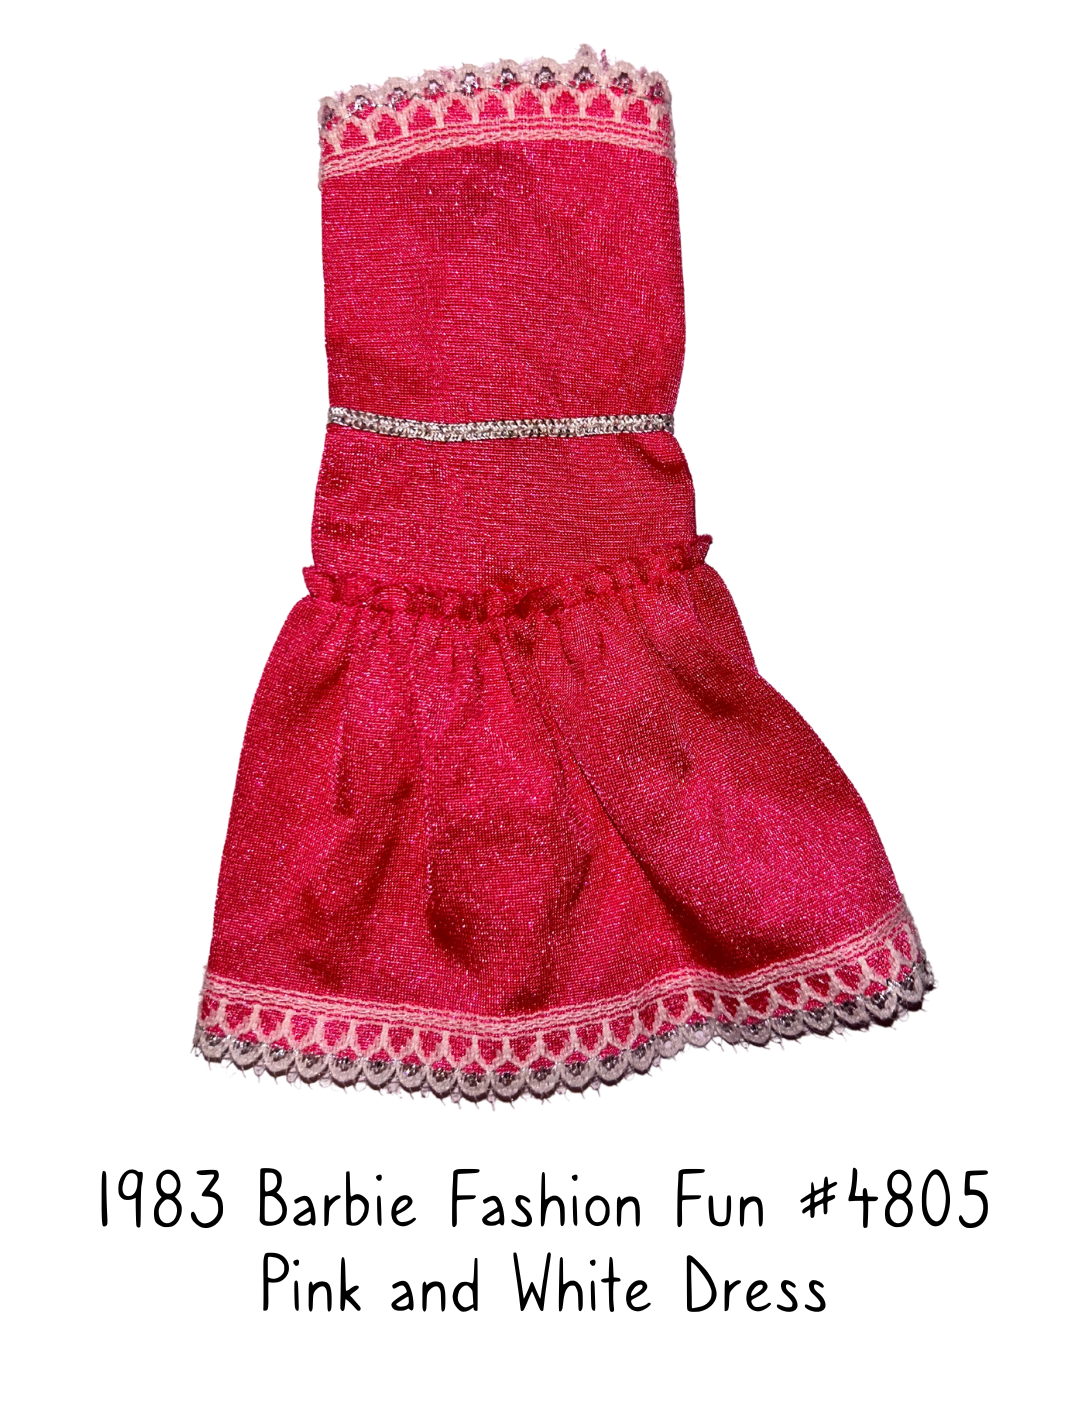 1983 Barbie Fashion Fun #4805 Pink and White Dress